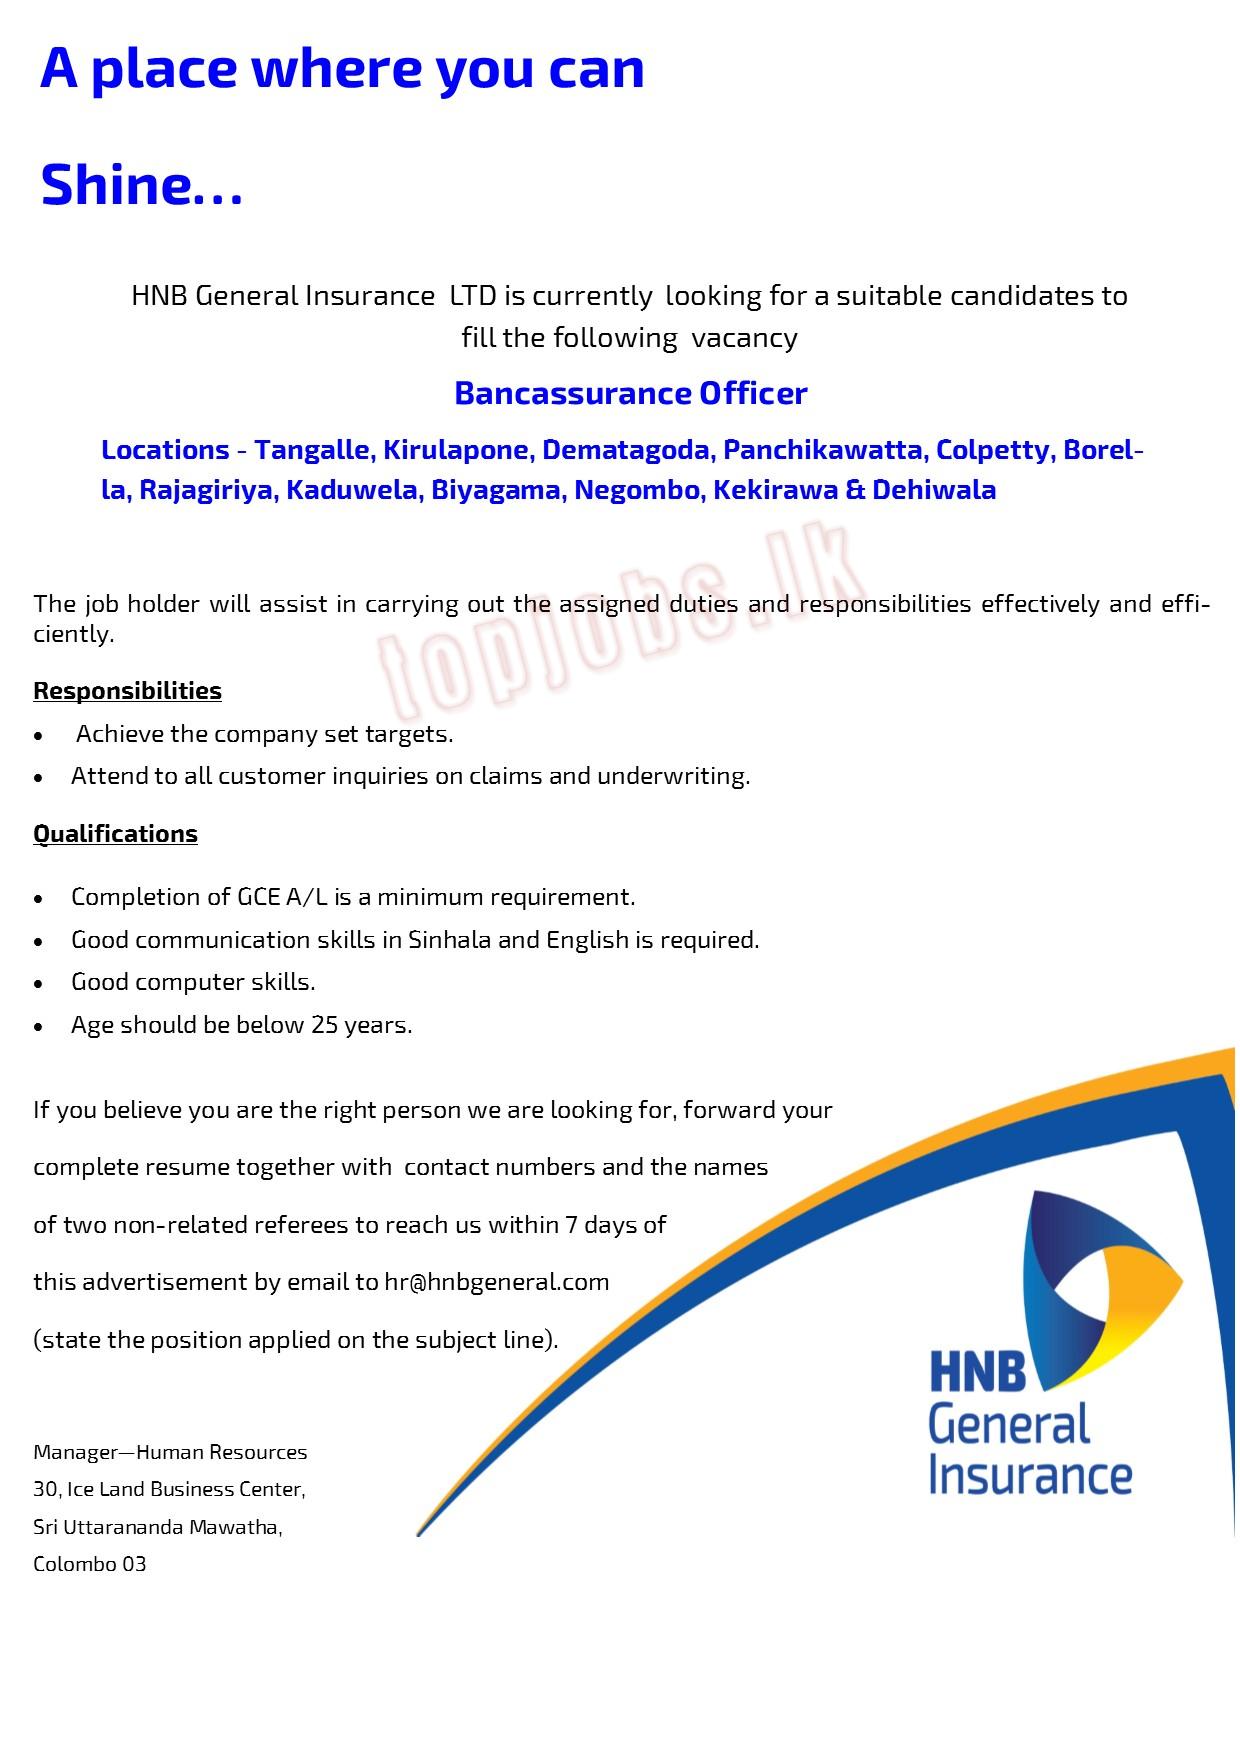 Bancassurance Officer - HNB General Insurance Limited Job Vacancies